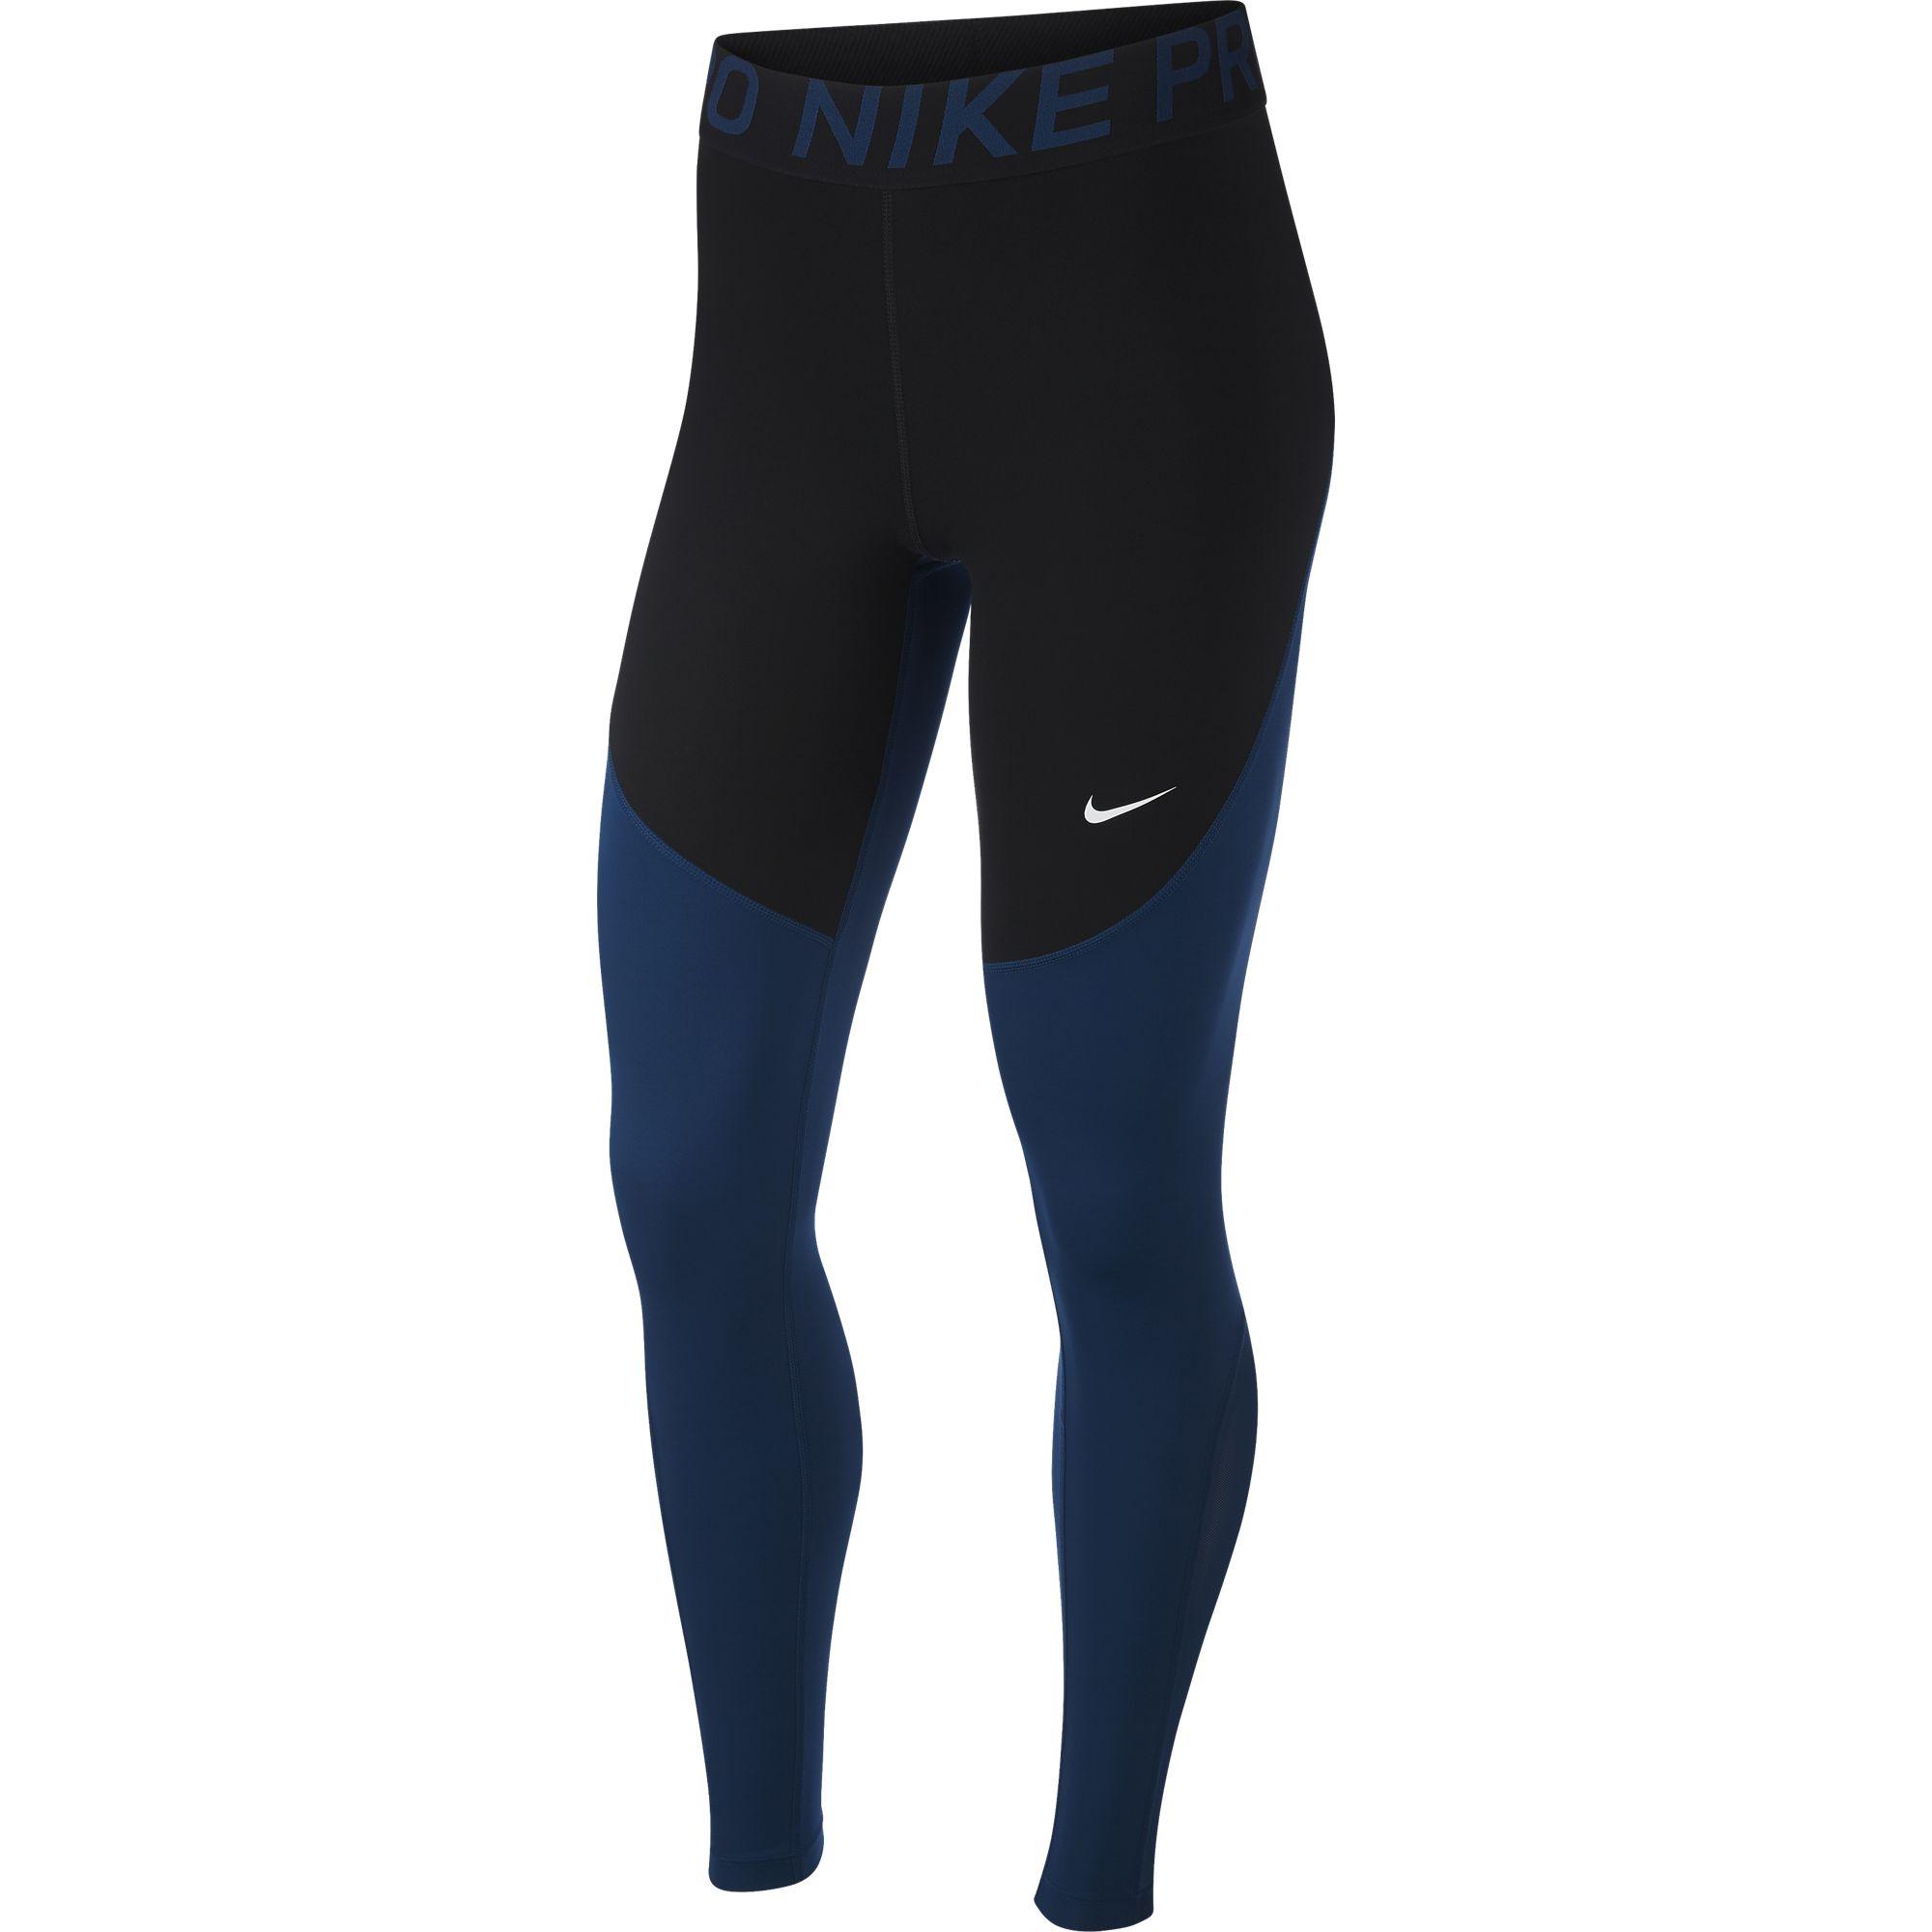 blue and black nike leggings